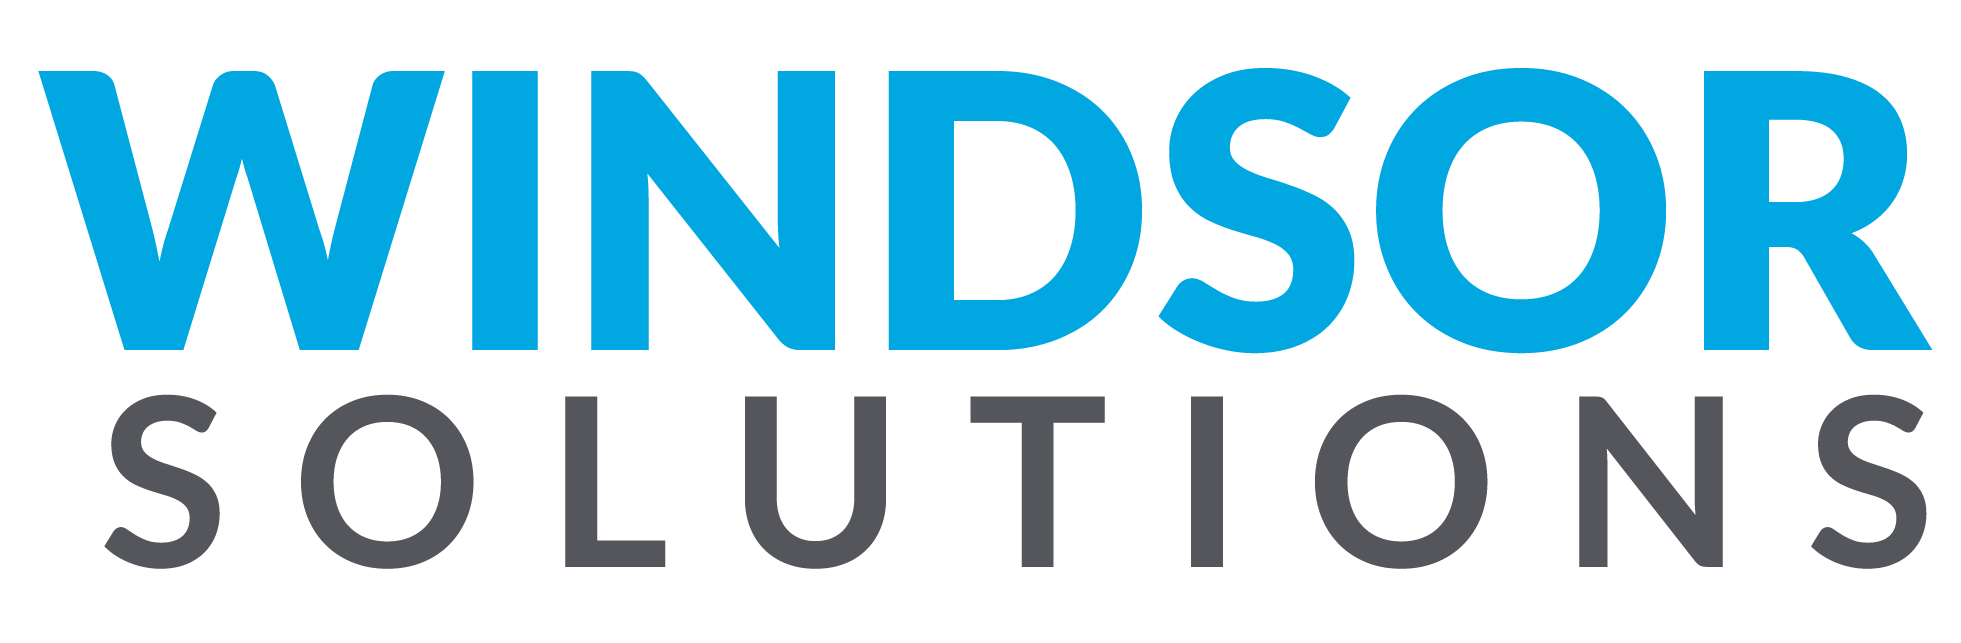 Windsor Solutions Ltd